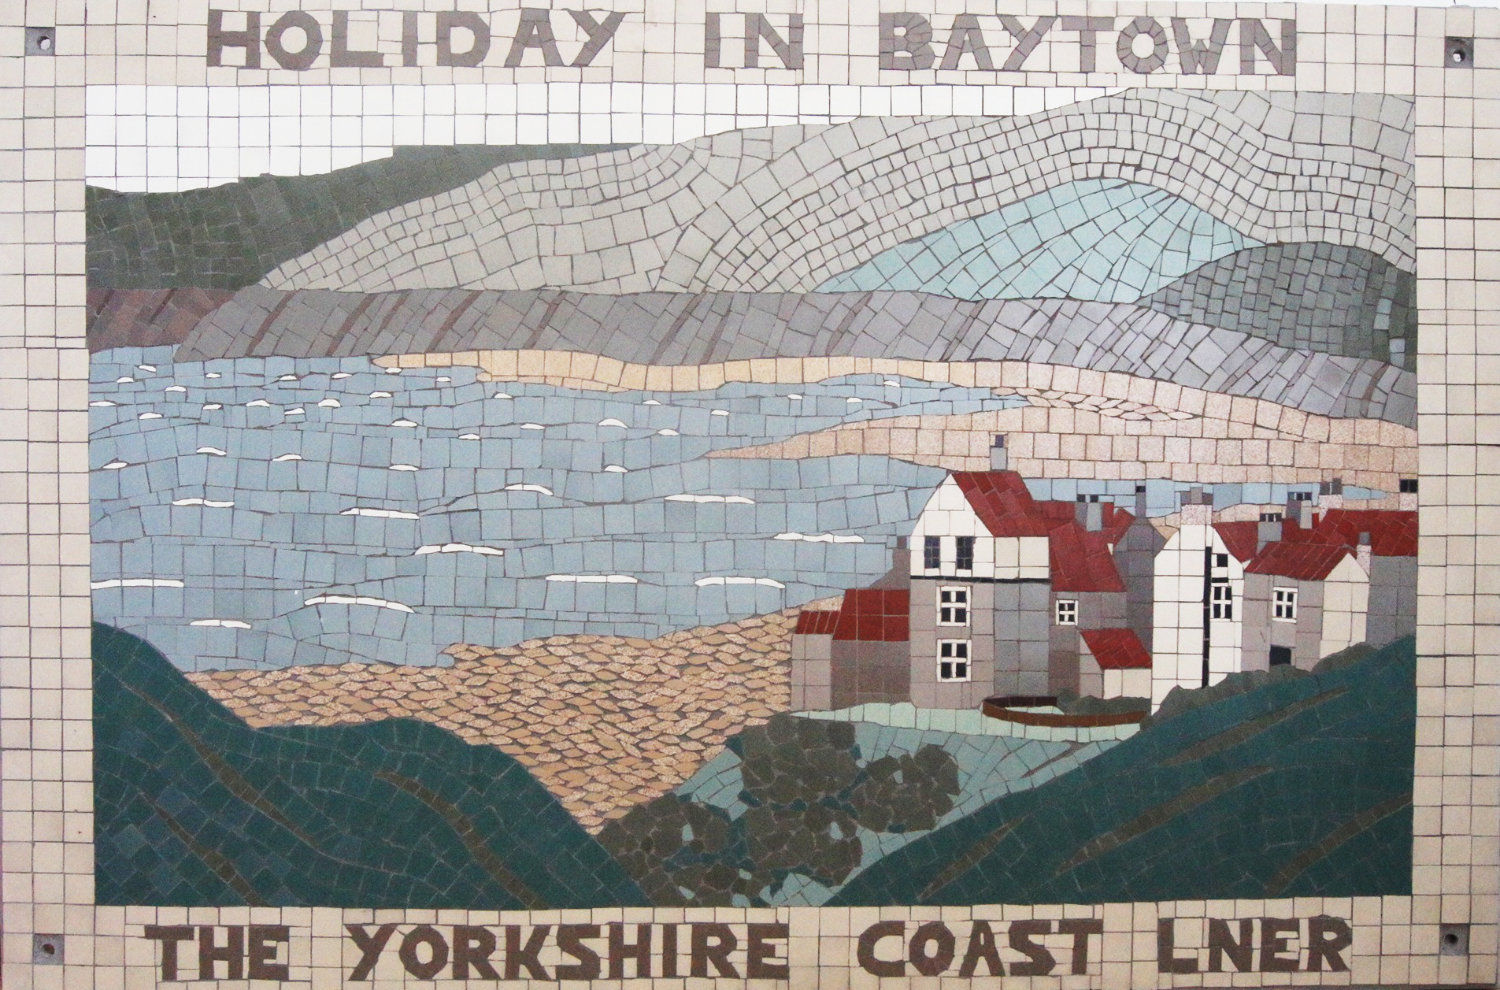 Victorian Railway Poster mosaic detail